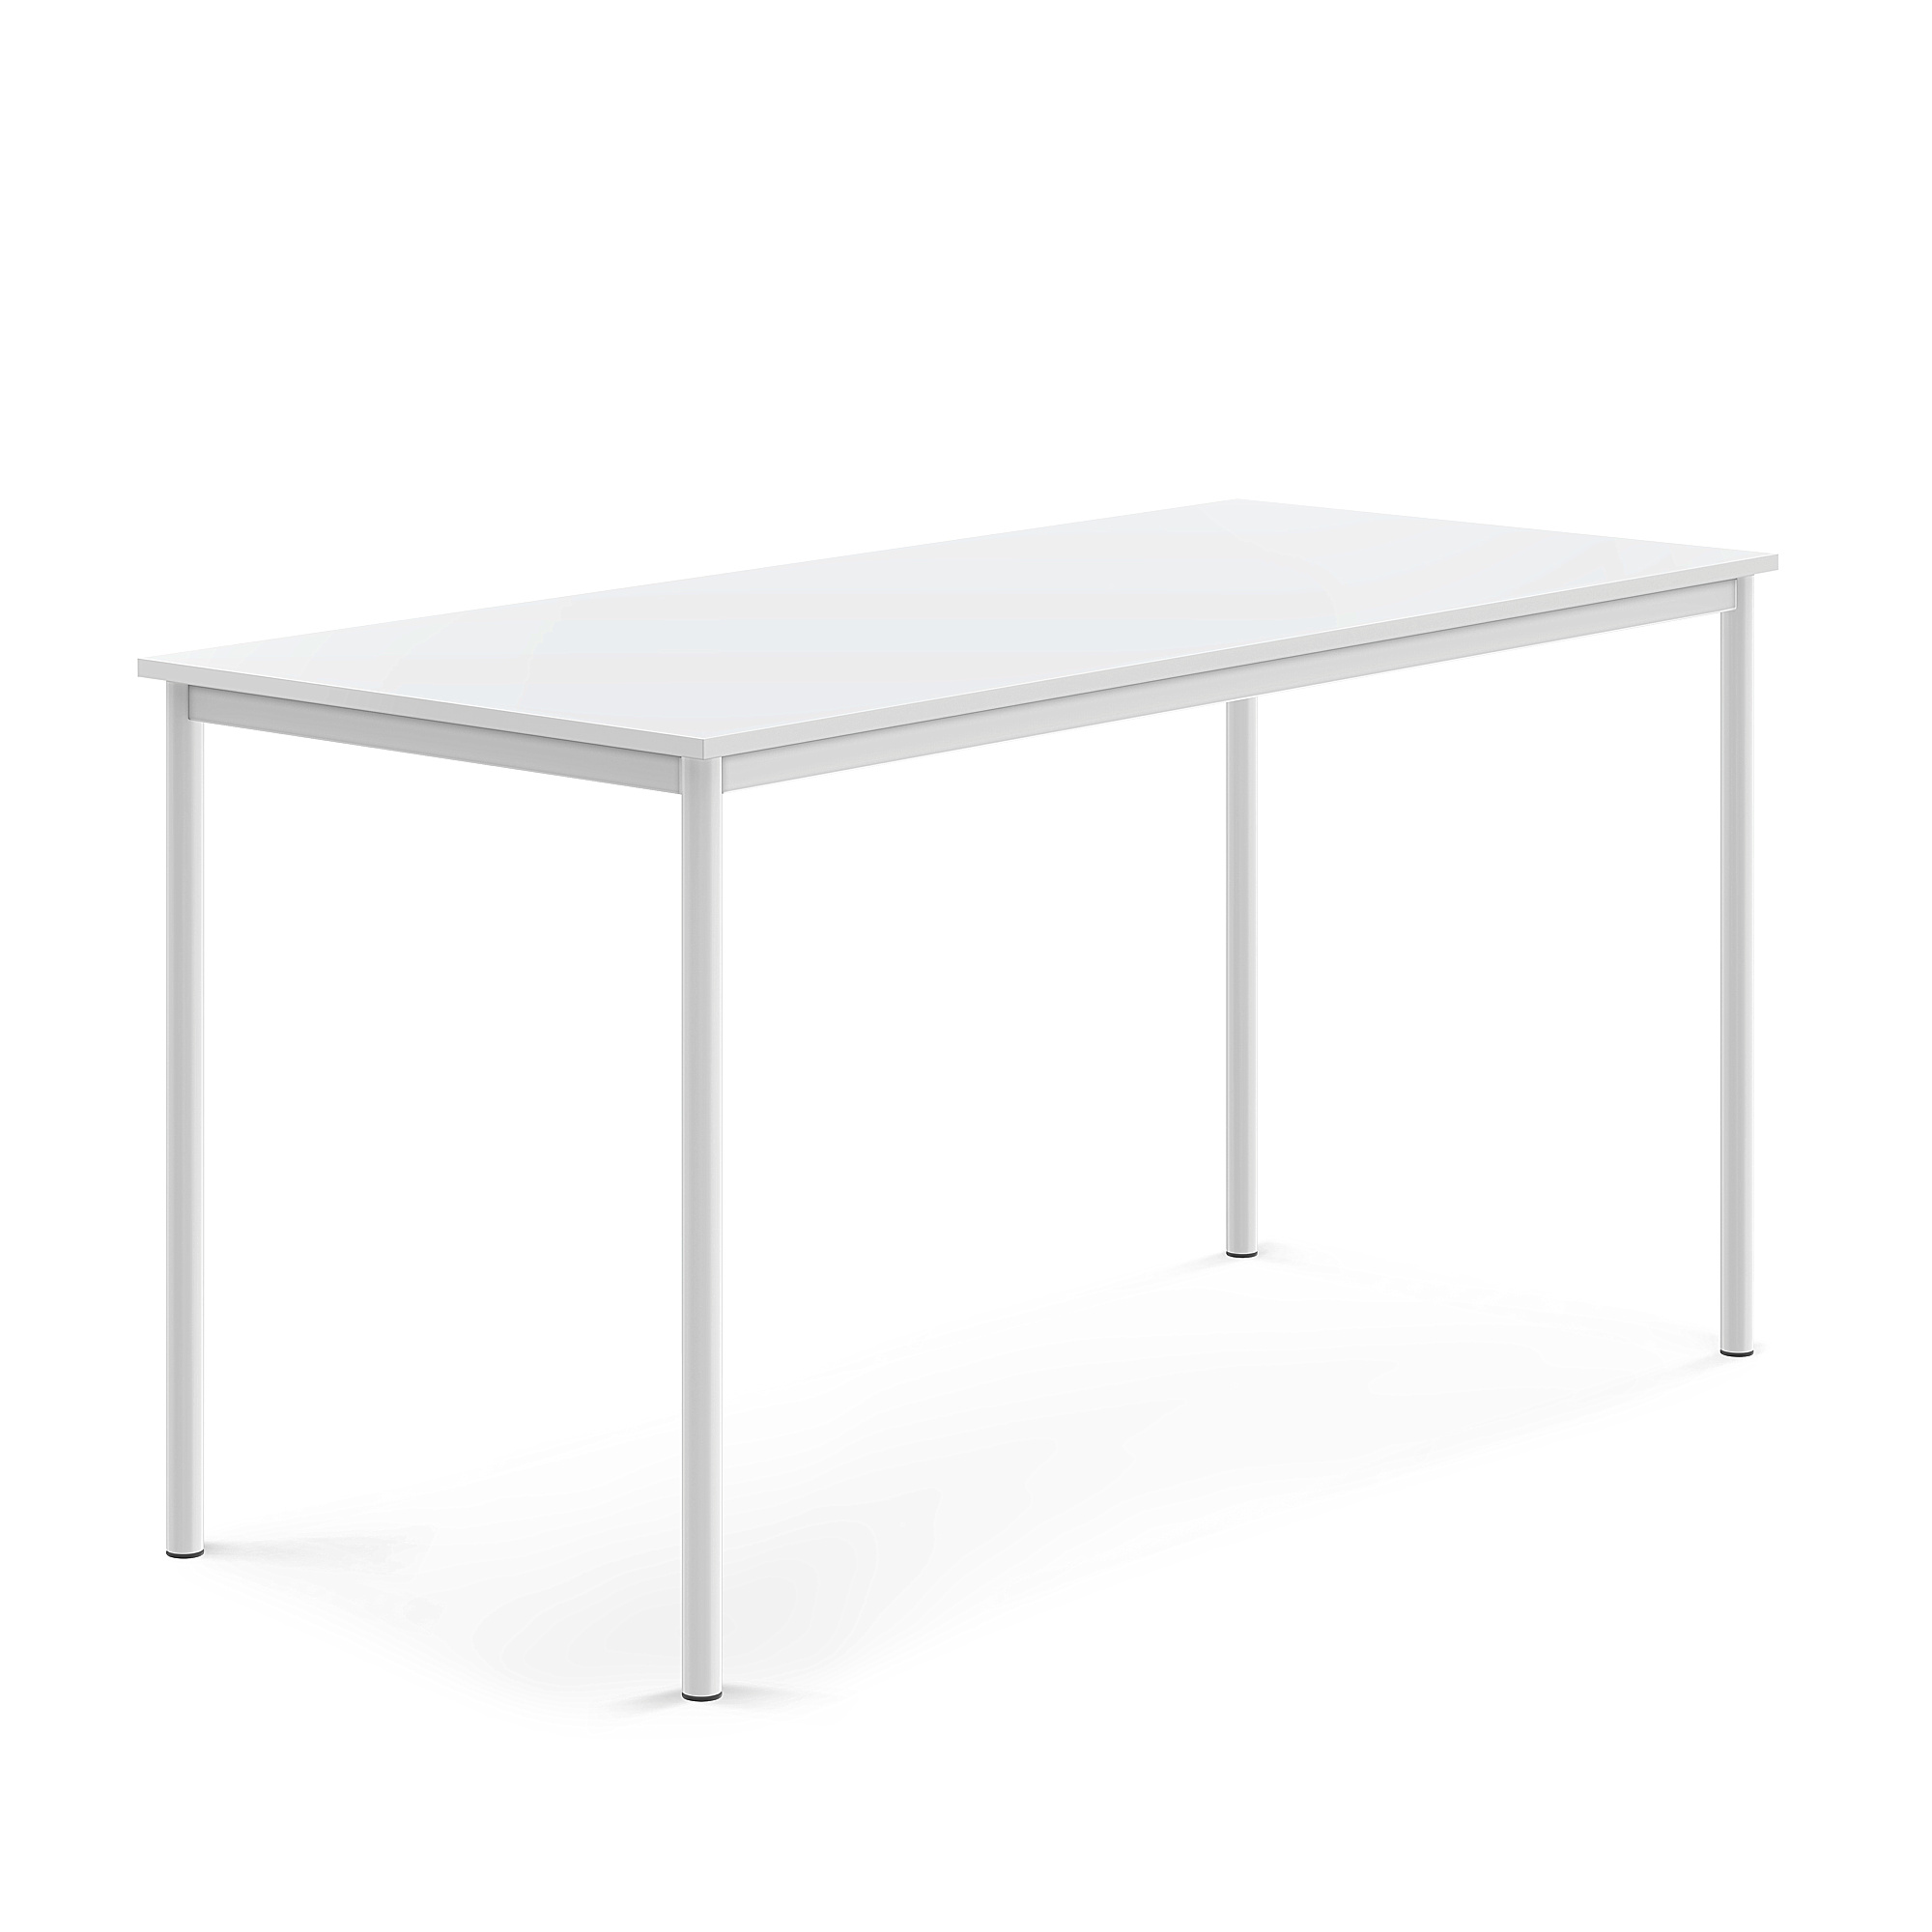 Stůl SONITUS, 1800x800x900 mm, bílé nohy, HPL deska tlumící hluk, bílá